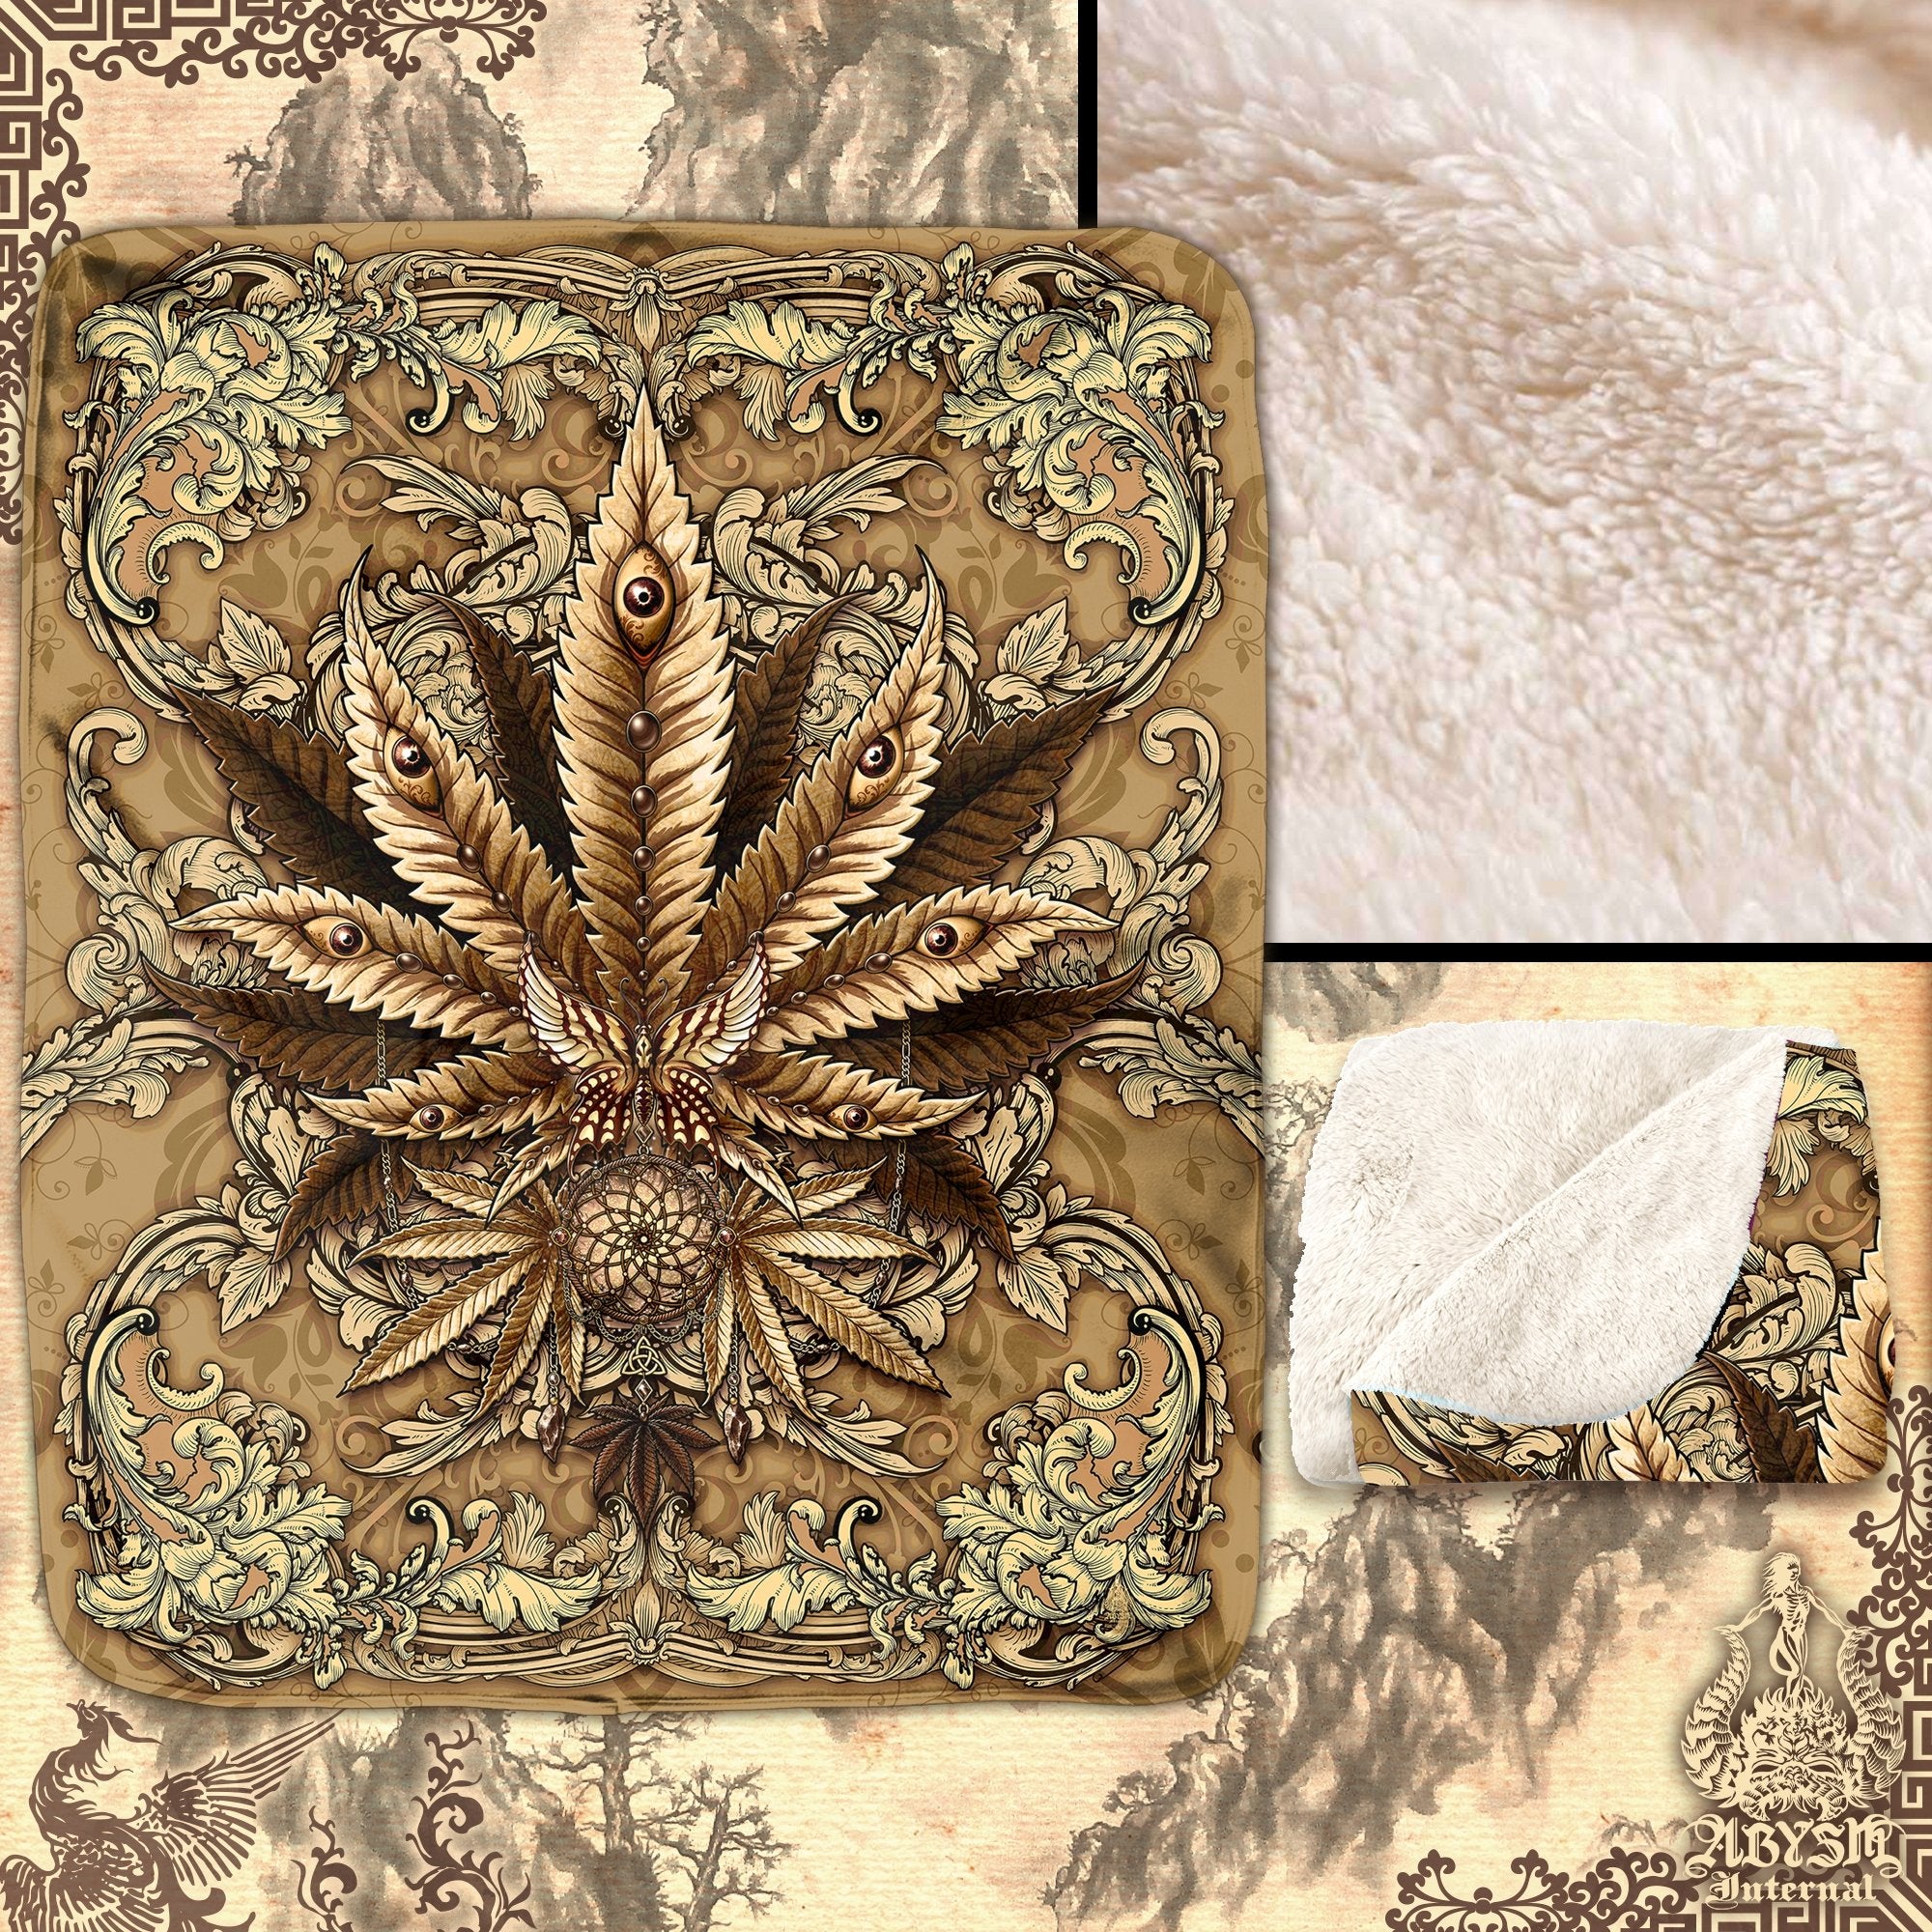 Weed Throw Fleece Blanket, Cannabis Art, Indie and Hippie Home Decor, 420 Gift - Cream - Abysm Internal